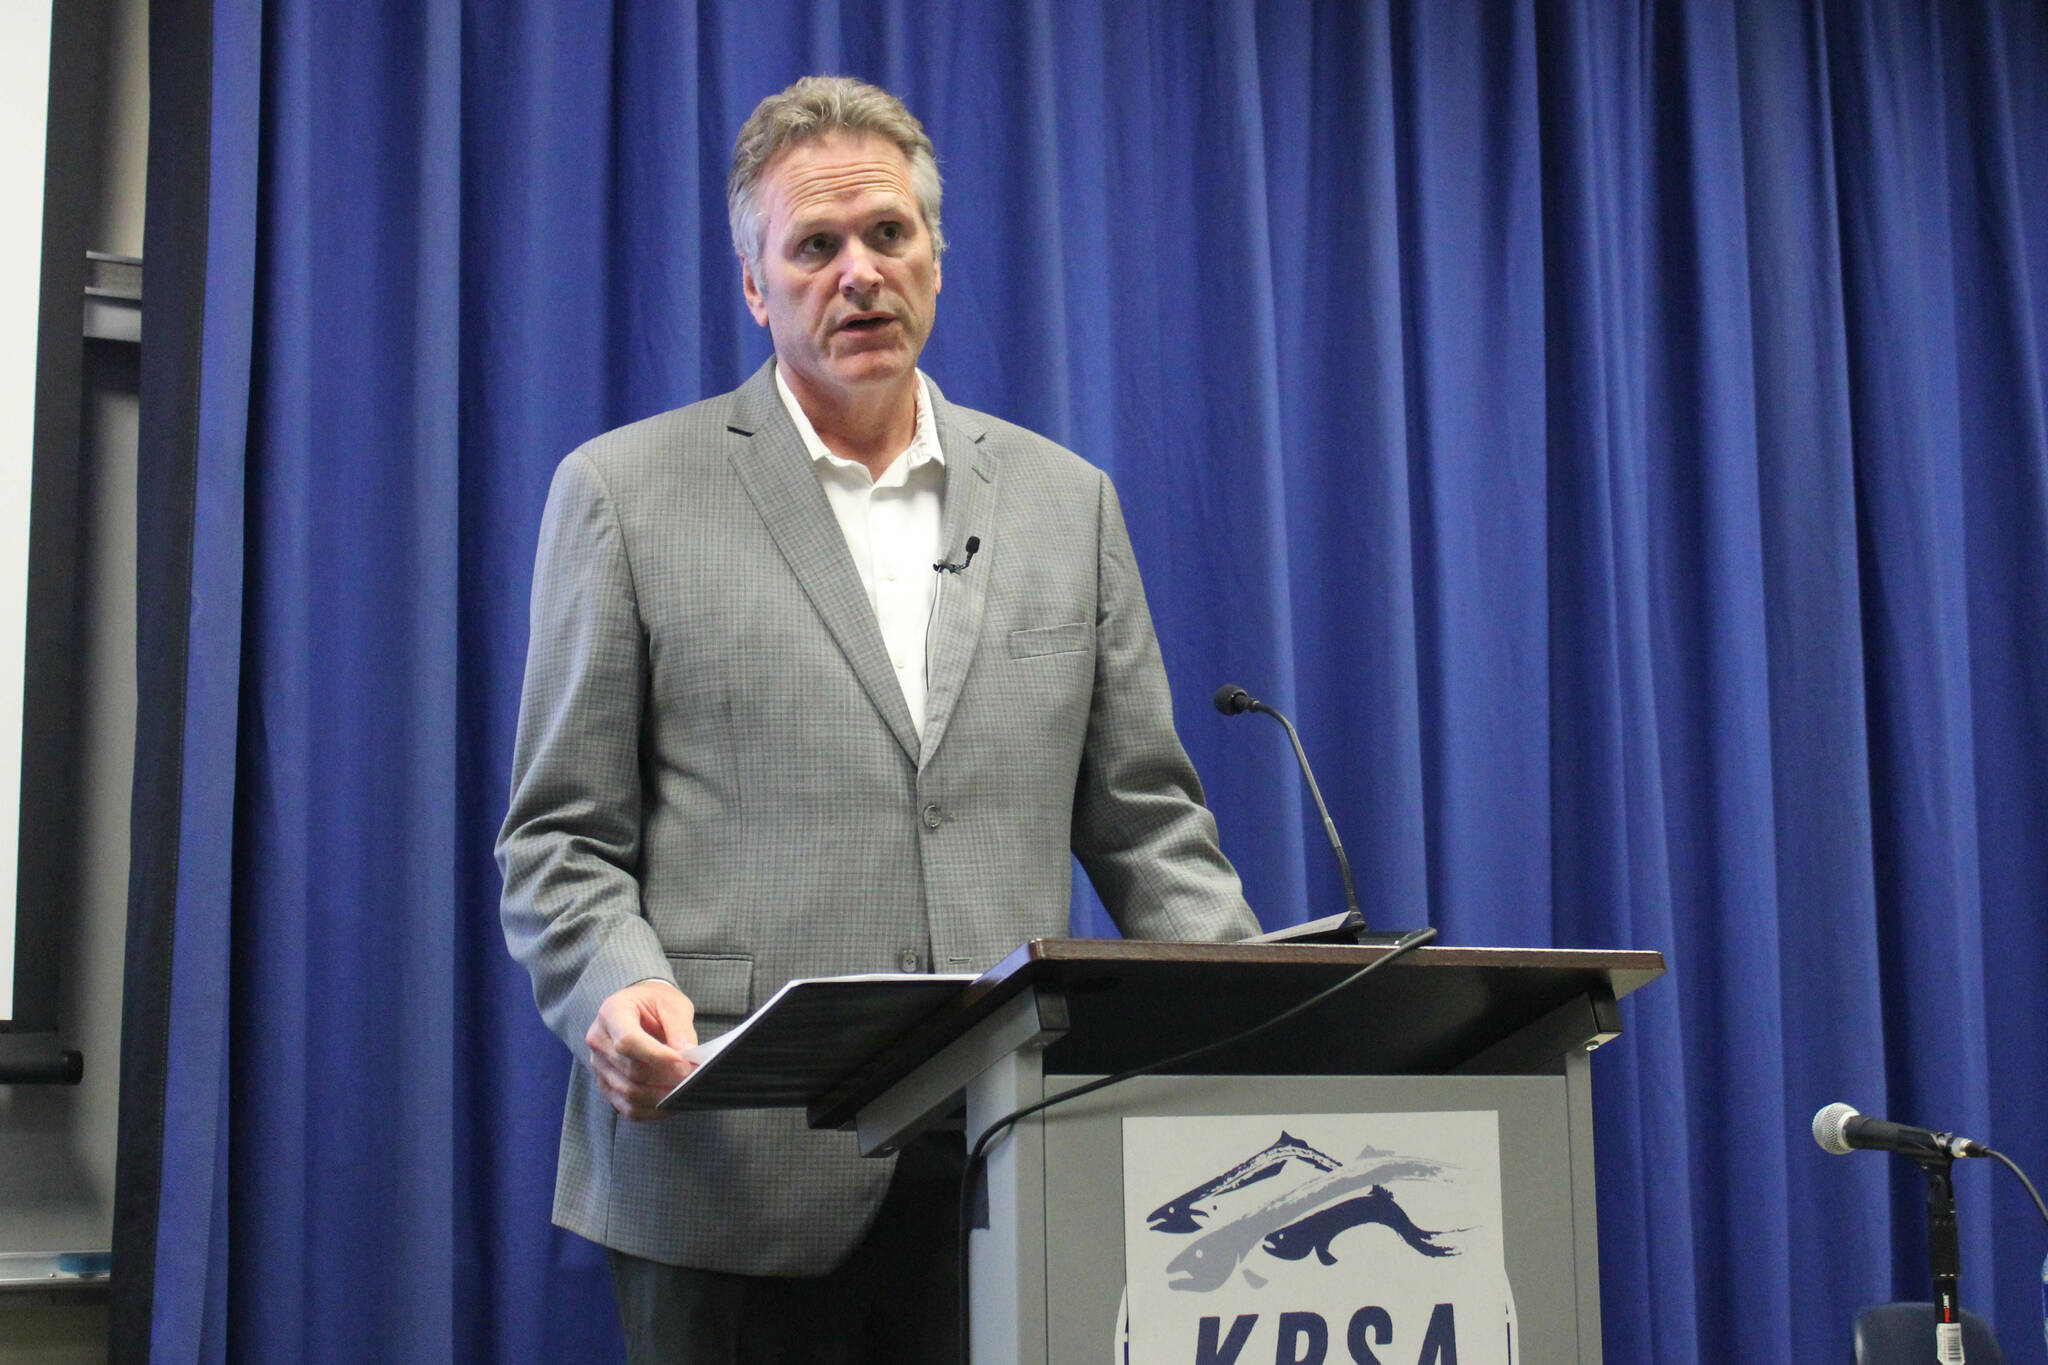 Gov. Mike Dunleavy speaks at the Kenai Classic Roundtable at Kenai Peninsula College on Wednesday, Aug. 17, 2022 near Soldotna, Alaska. (Ashlyn O’Hara/Peninsula Clarion)